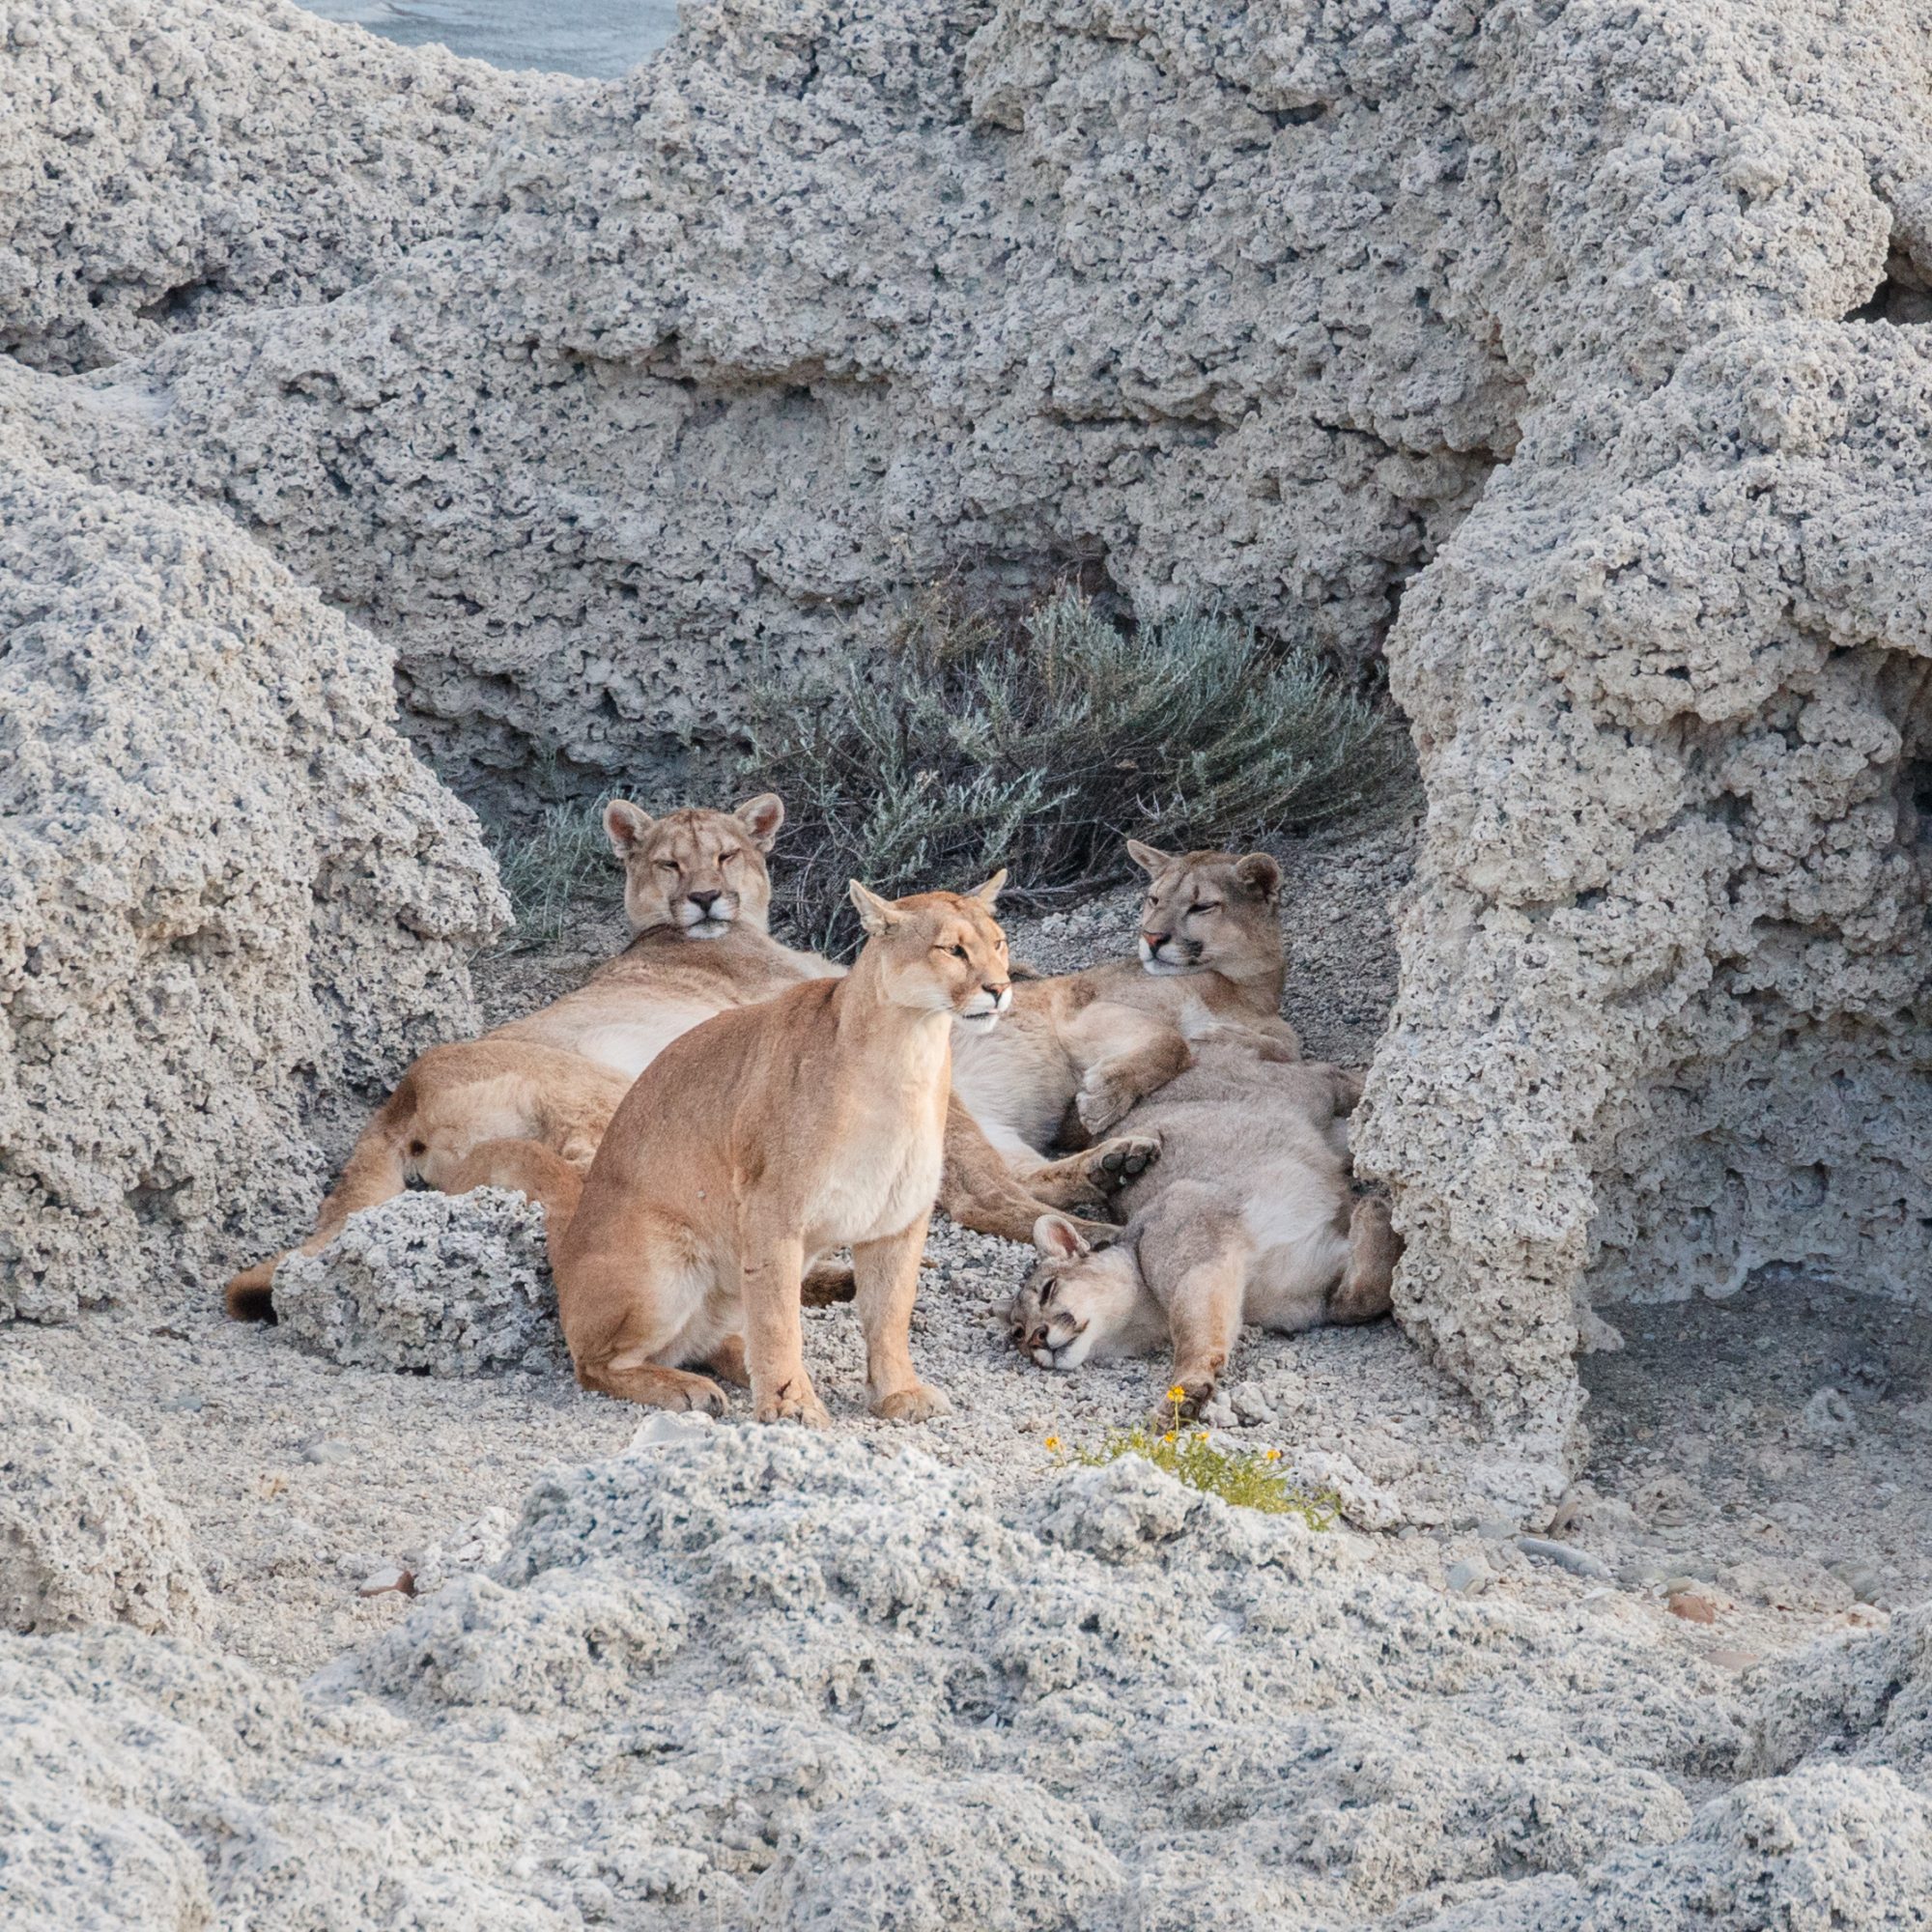 Puma family at the lake side – Patagonia, Chile 2018